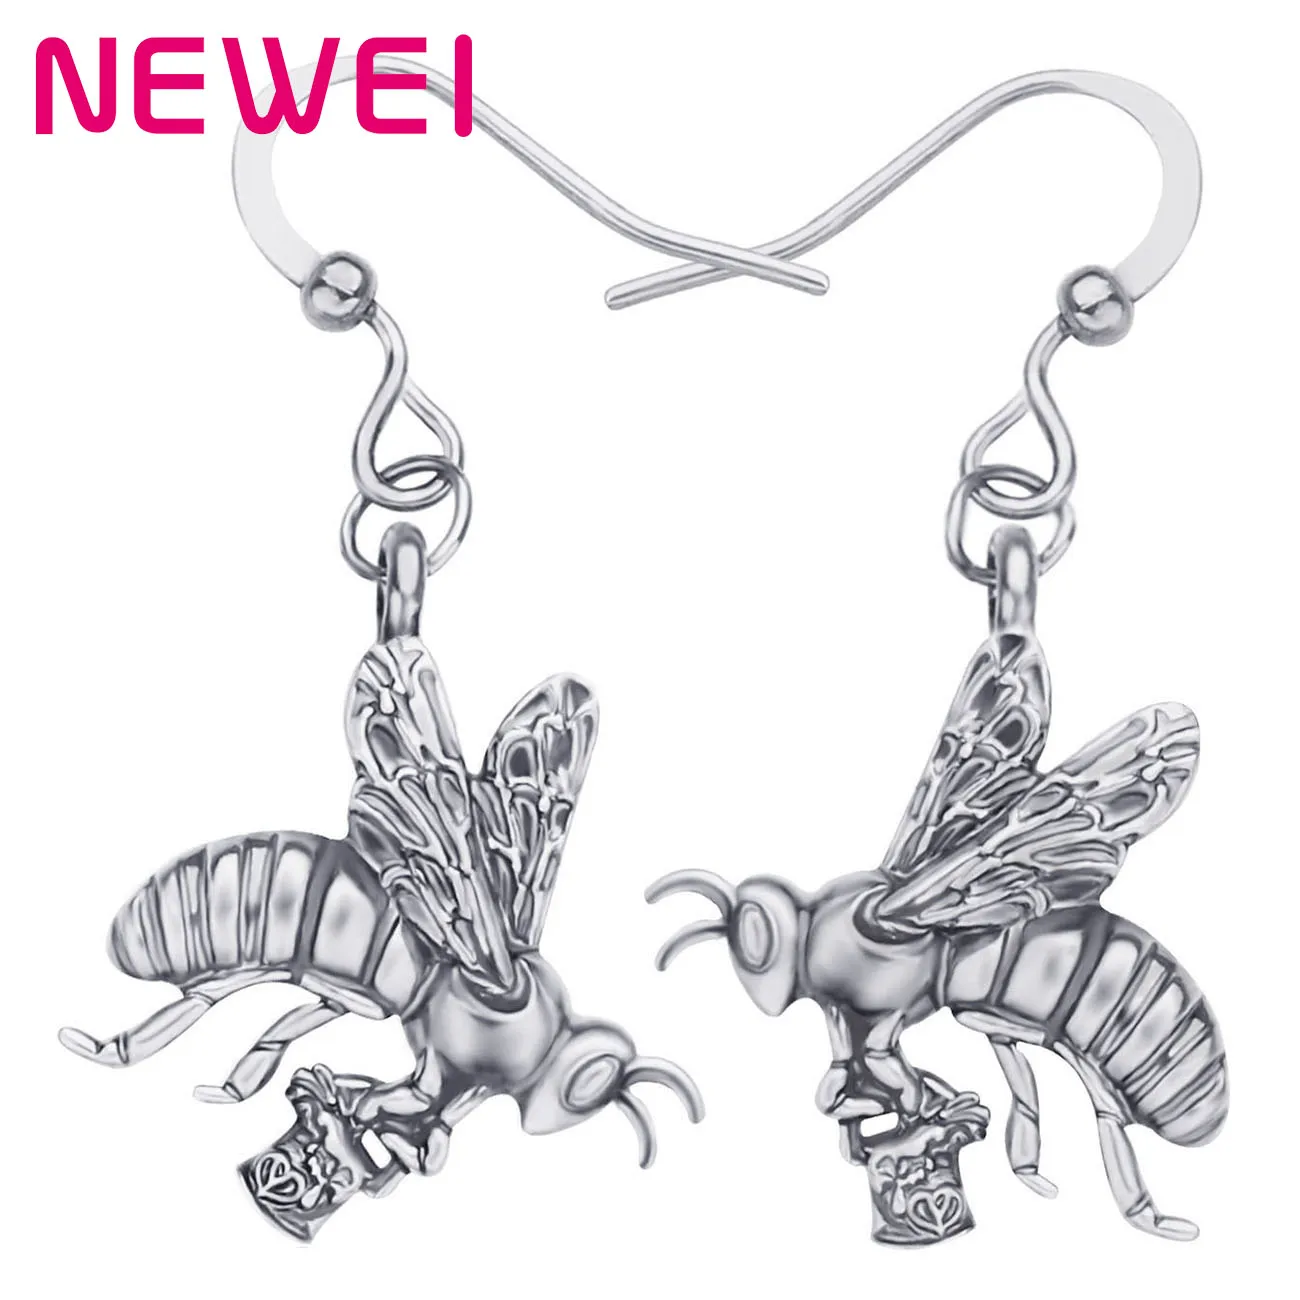 

Newei Alloy Metal Antique Sliver Plated Honeybee Bee Earrings Lovely Animal Dangle Drop Jewelry For Women Girls Kid Novelty Gift